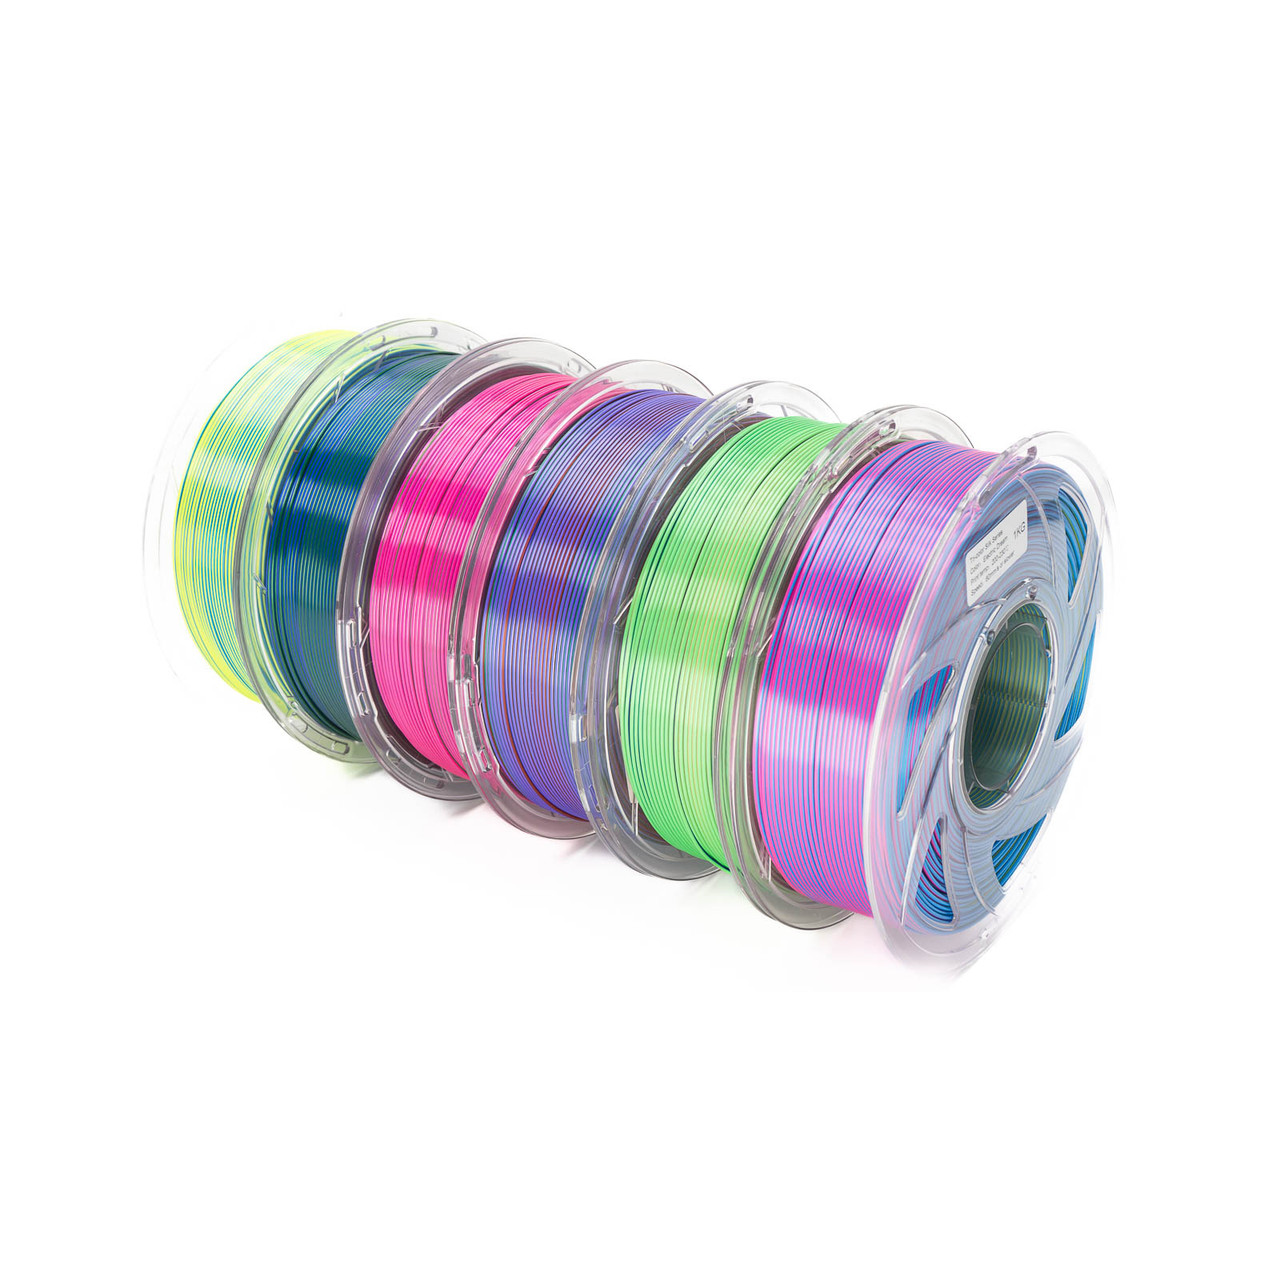 silk tricolor filament, triple color filament,3 colors,pla filament